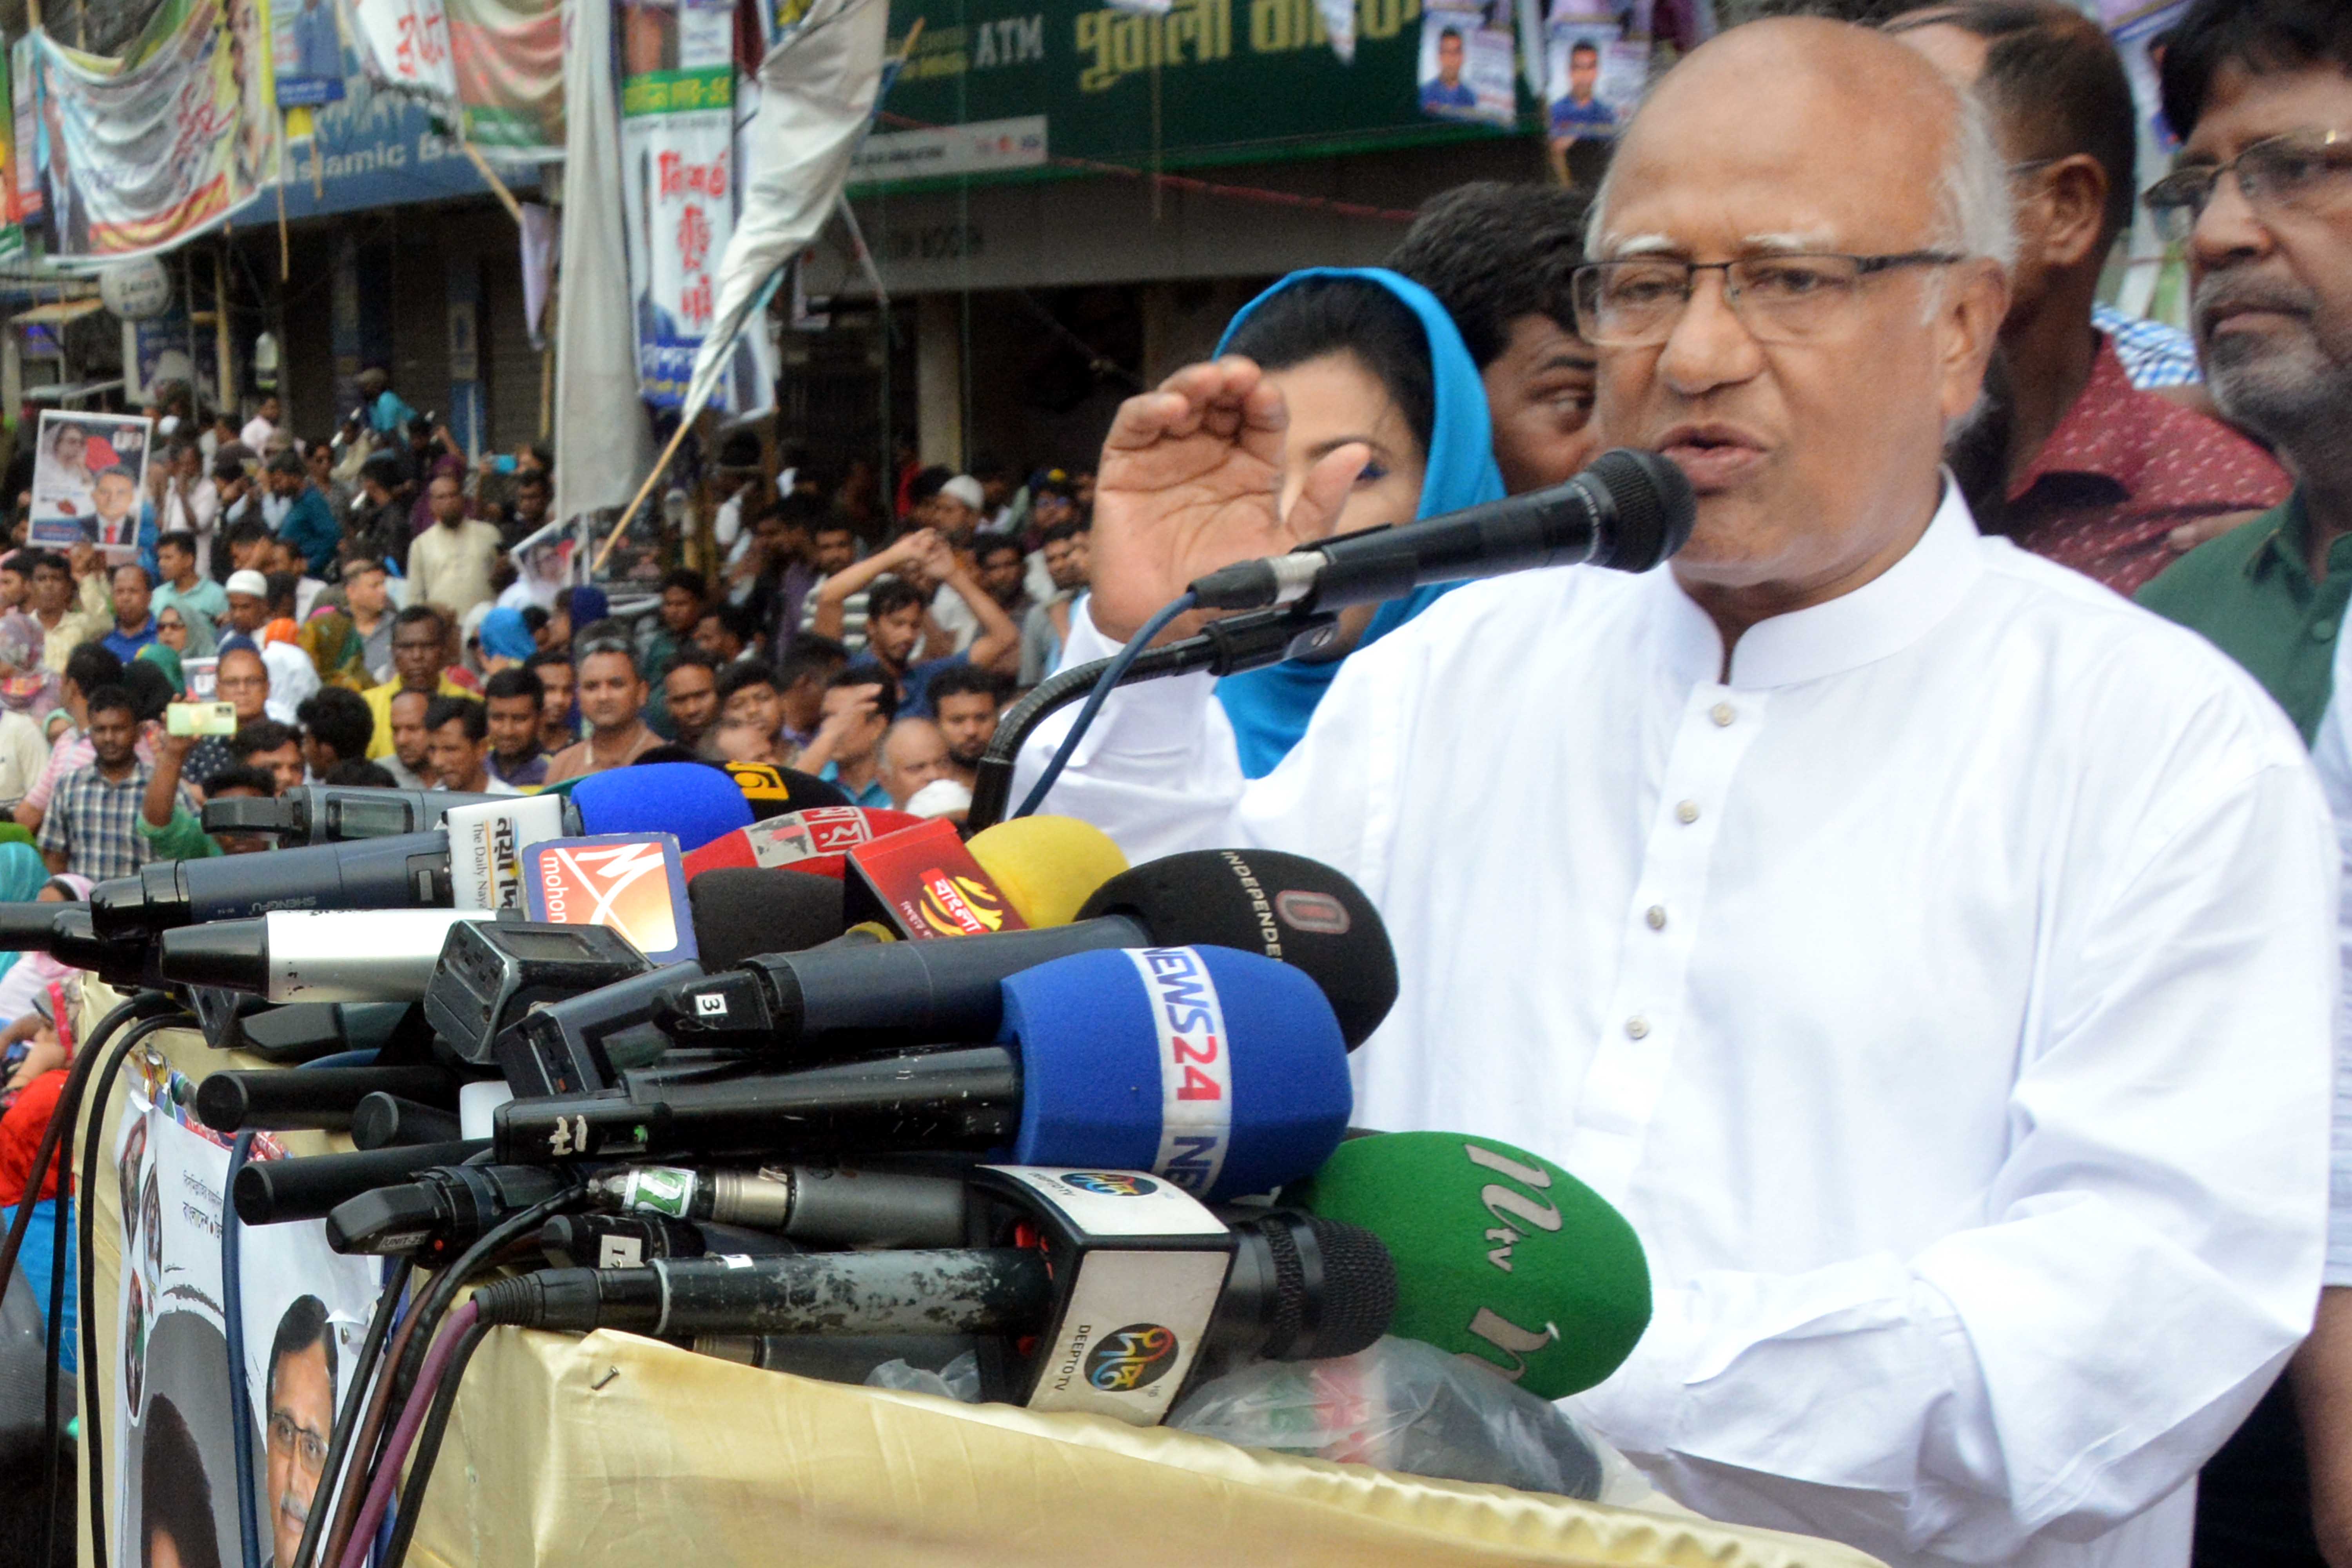 AL govt obstacle to fair polls in Bangladesh: Mosharraf